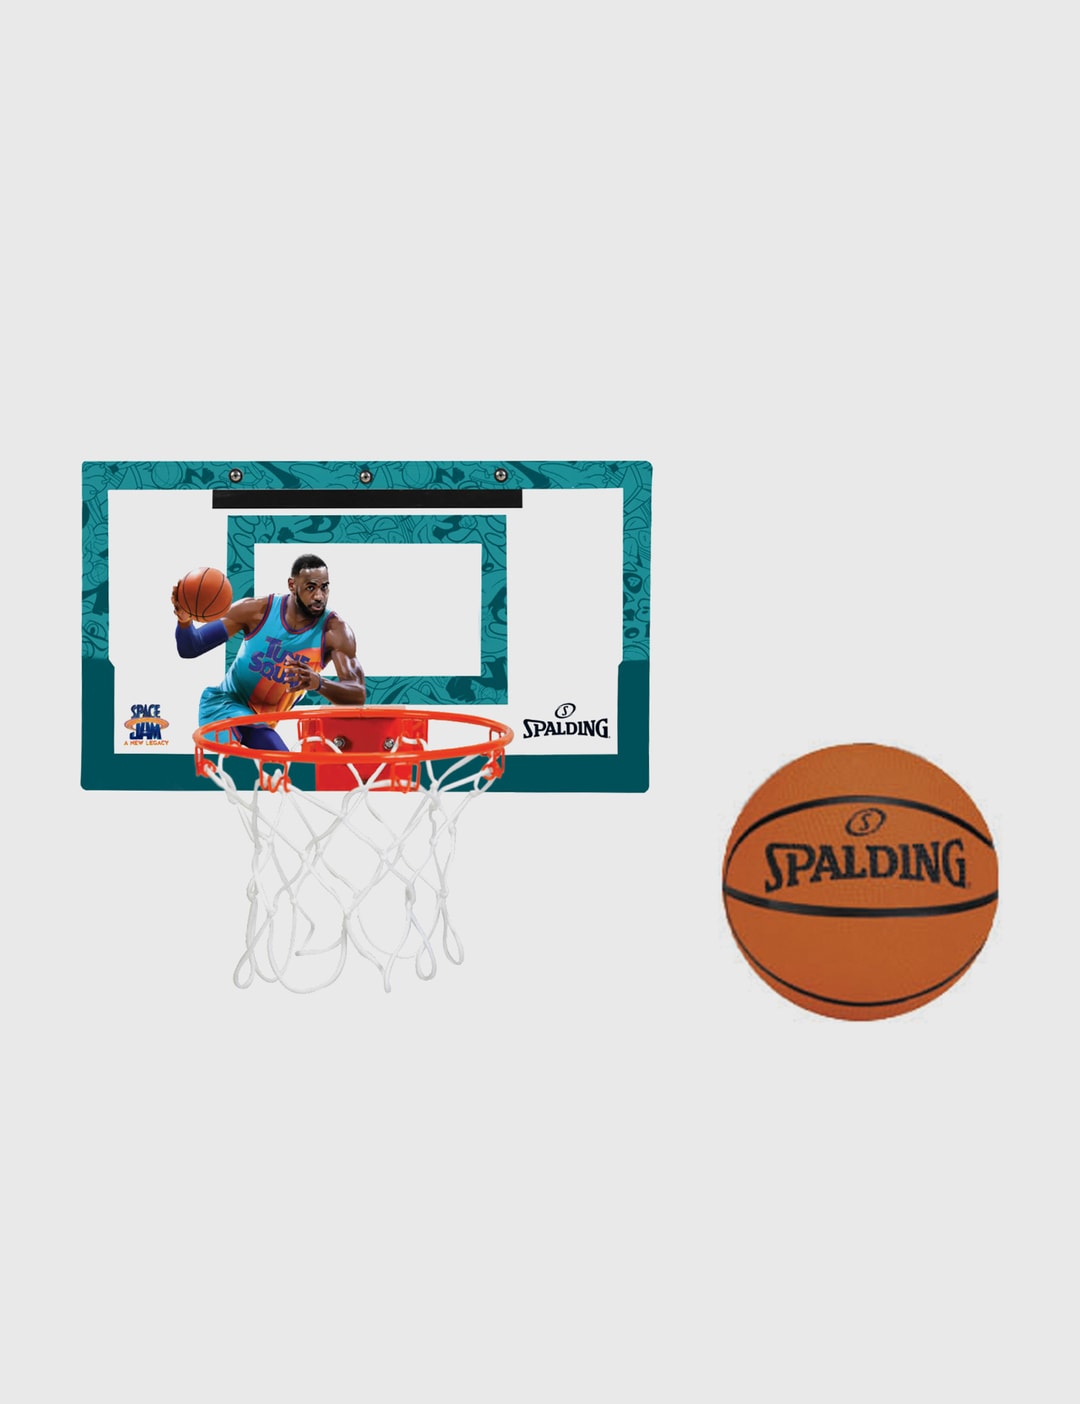 LOUIS VUITTON LV X NBA BASKETBALL BALL, Sports Equipment, Sports